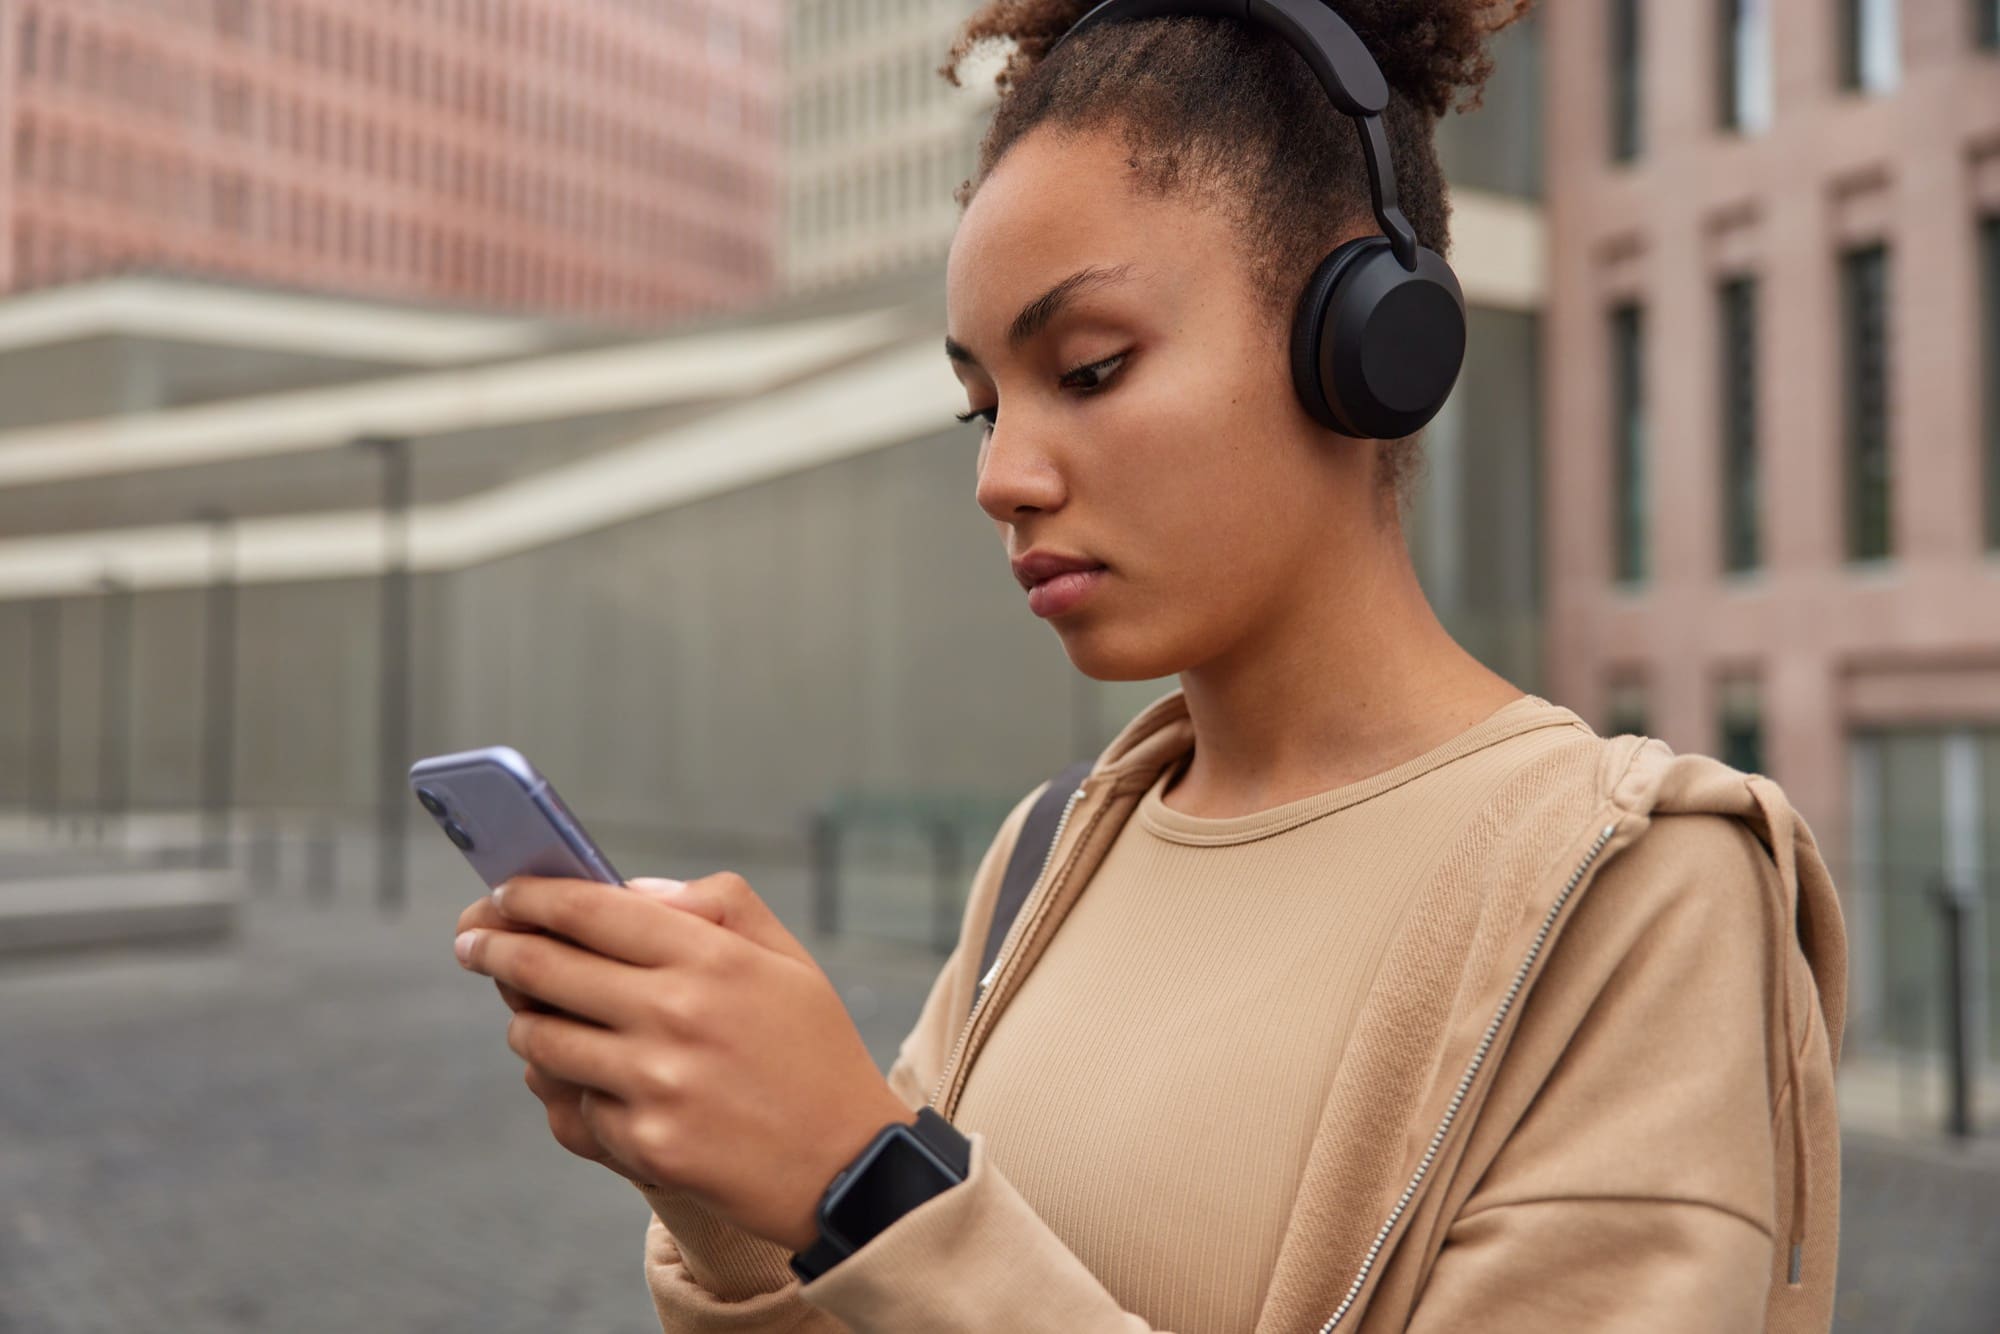 Girl is pairing wireless headphones to phone via bluetooth